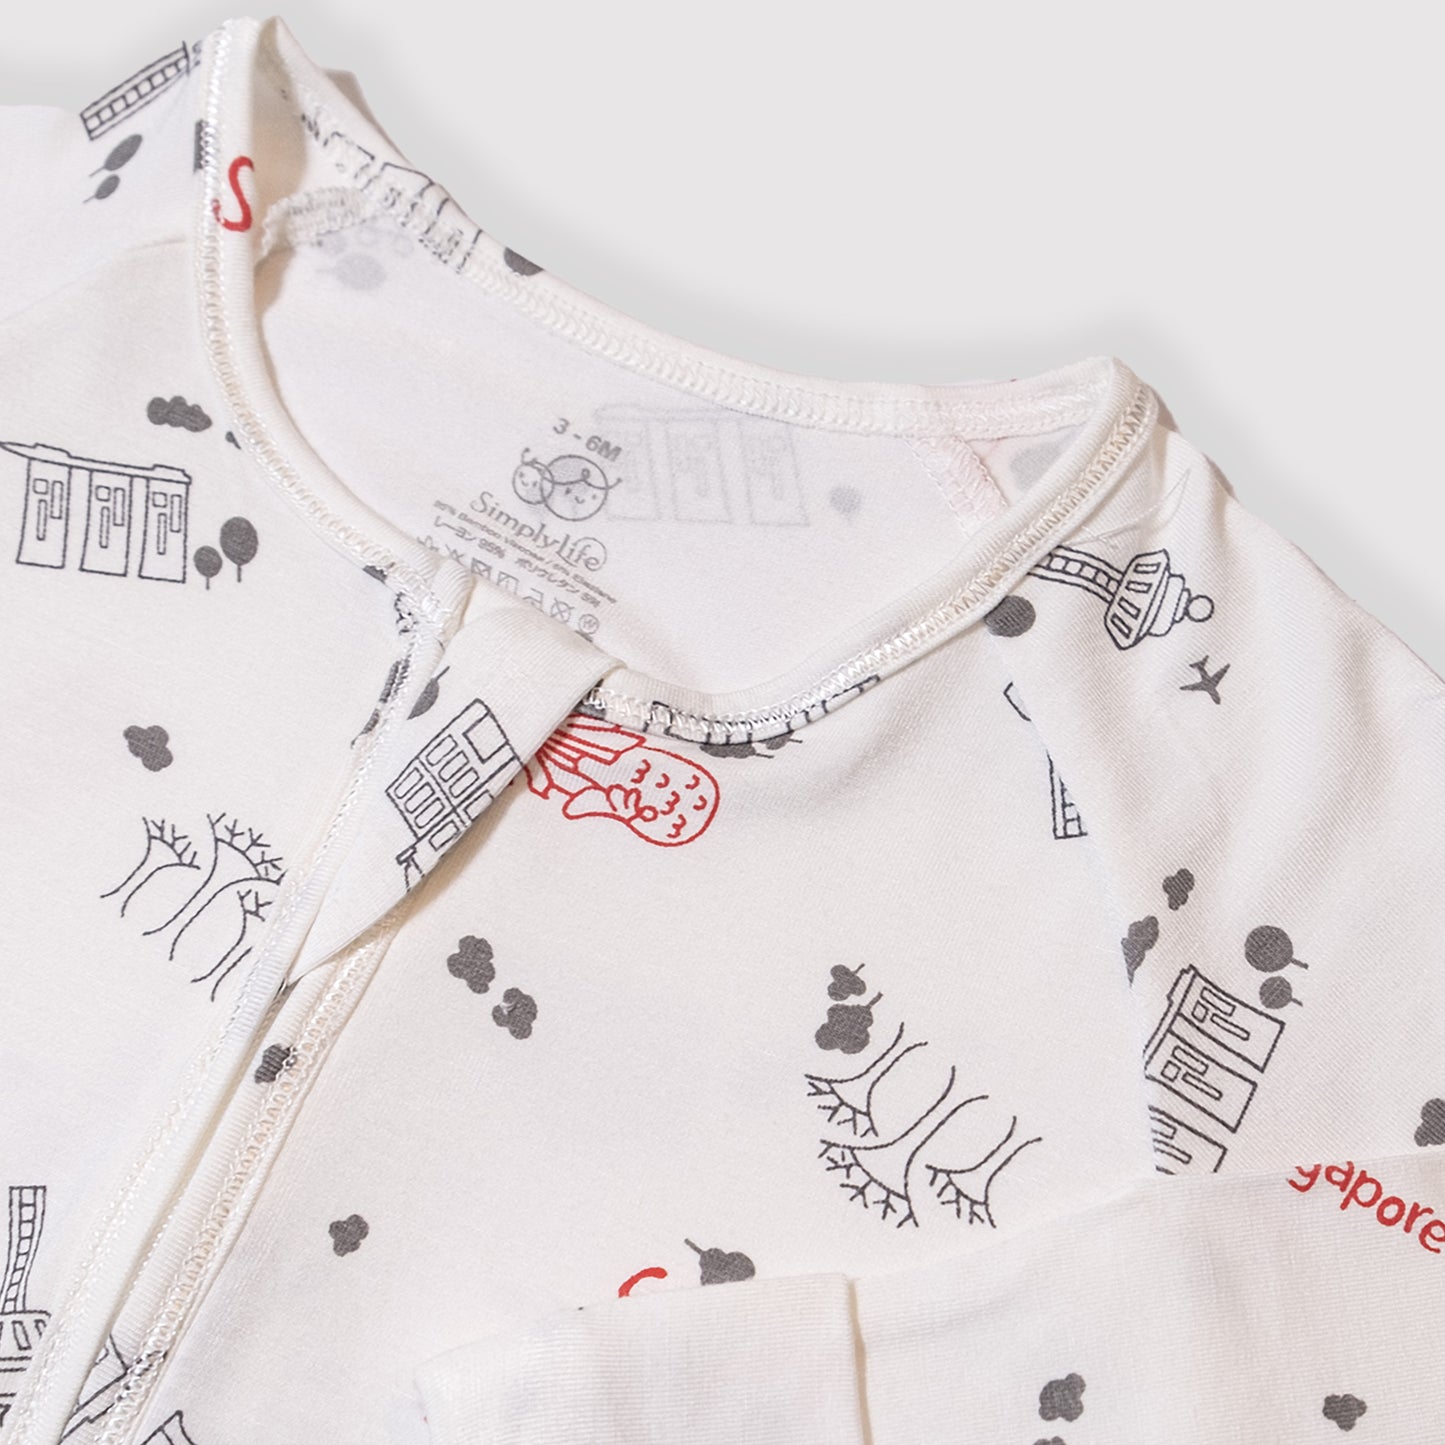 Singapore - Baby Long-sleeved Zipper Sleepsuit (Foldable Mittens & Footies)